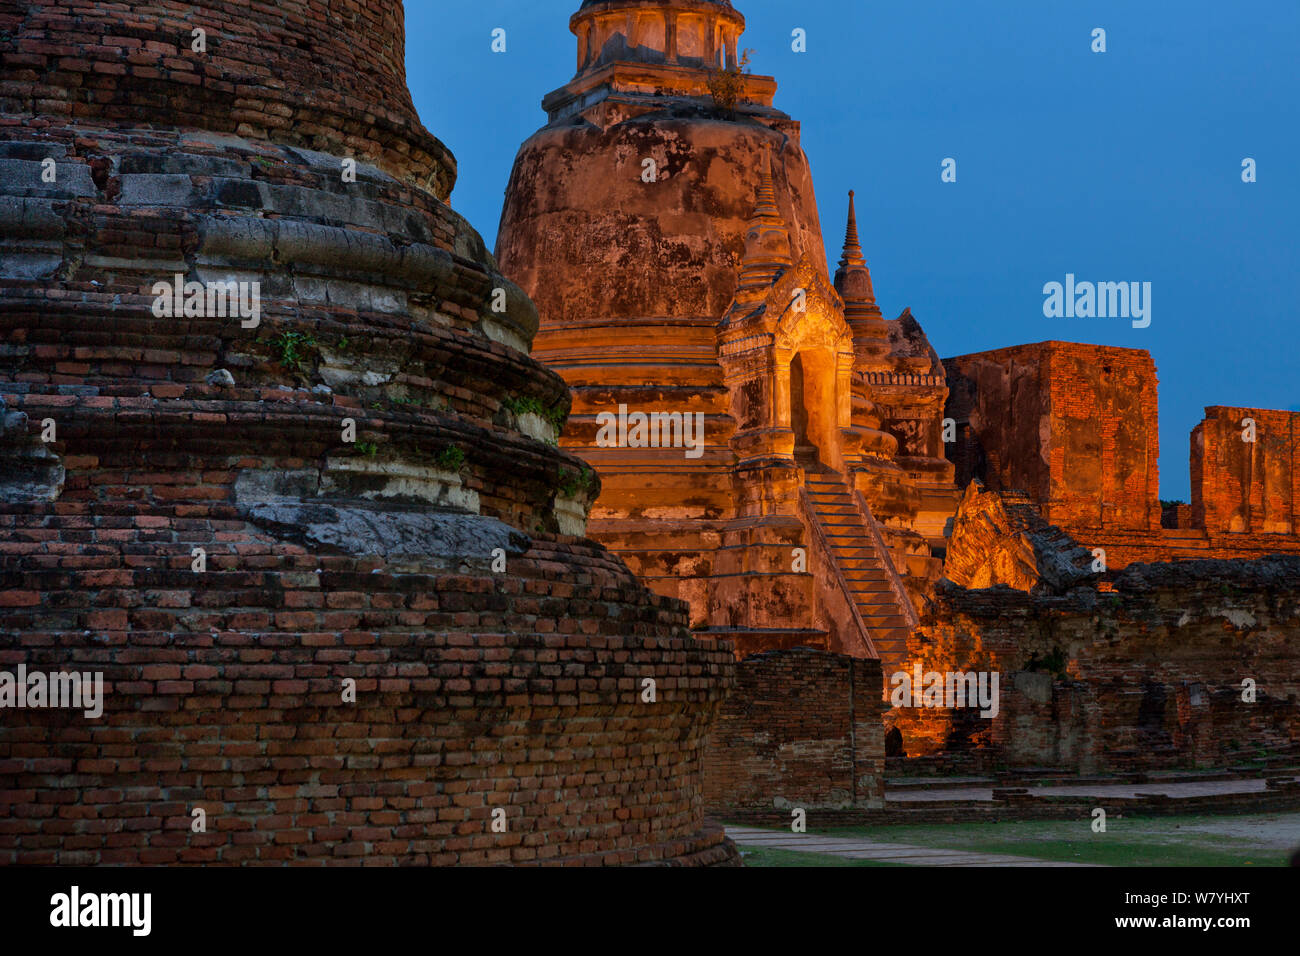 Wat Phra Samphet temple at night, Ayutthaya, Thailand, September 2014. Stock Photo